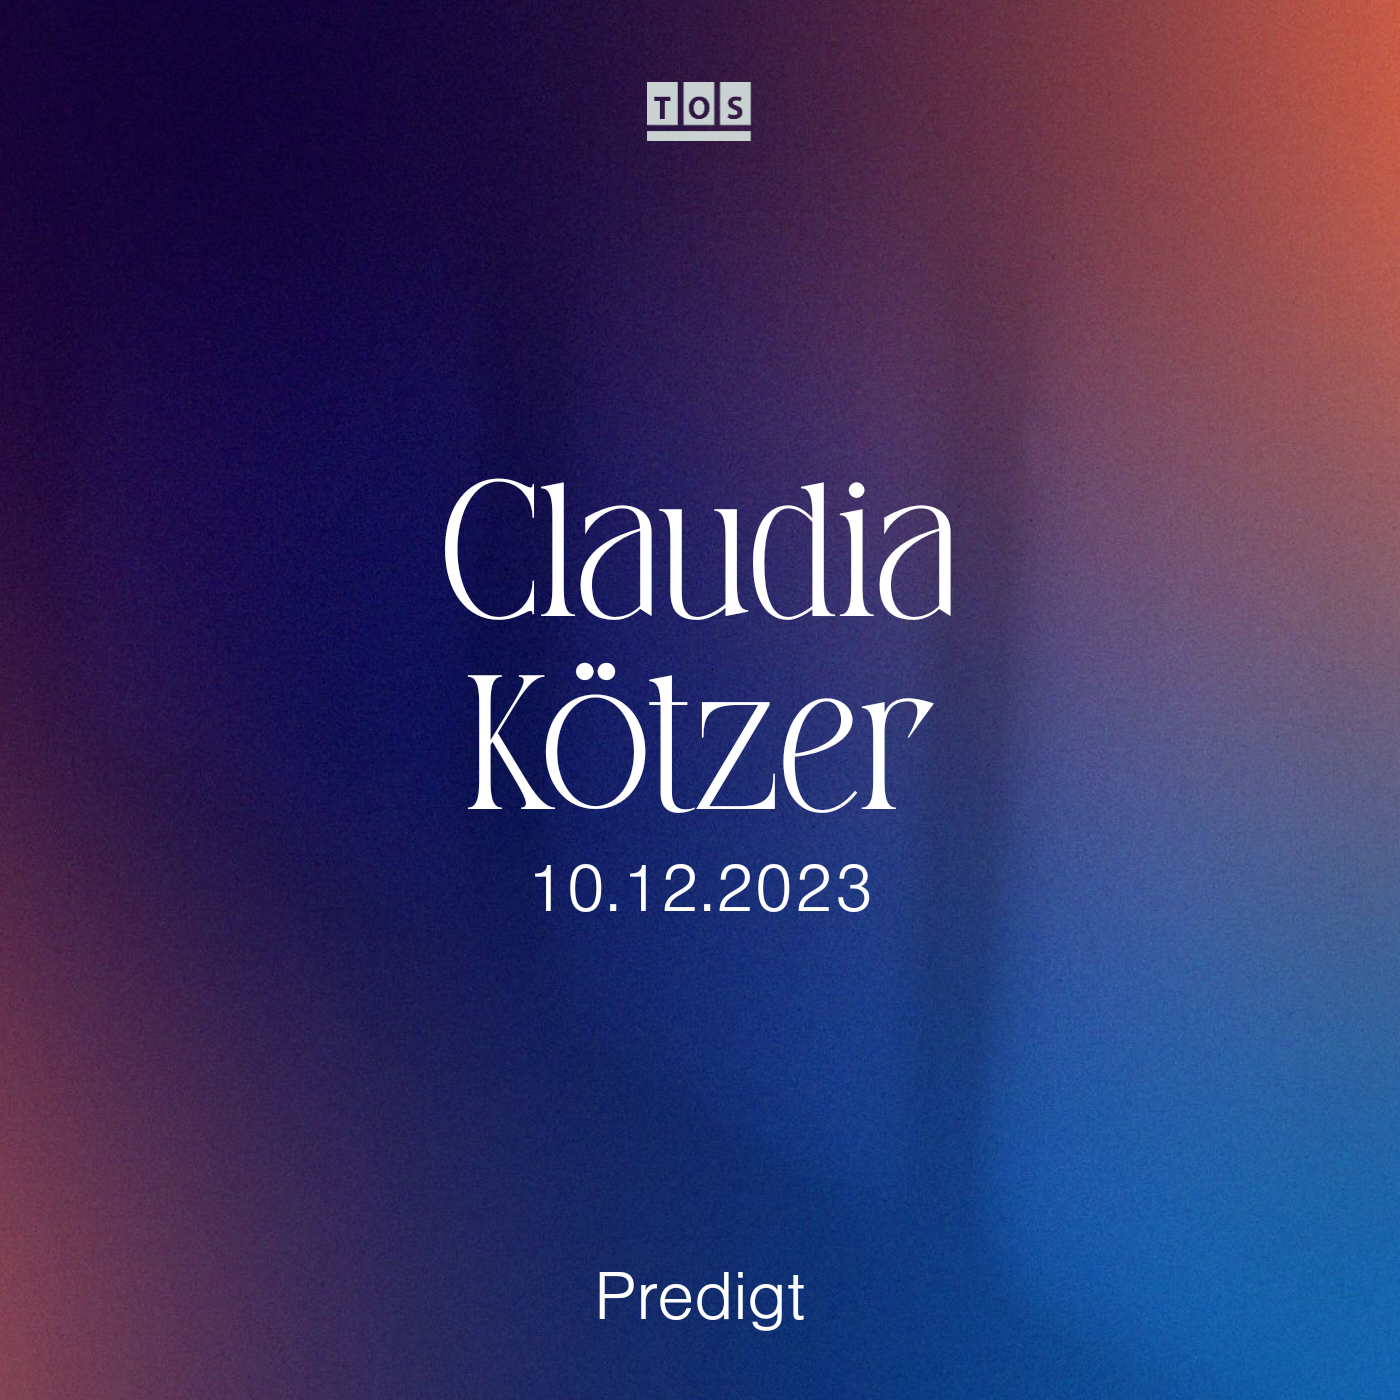 Claudia Kötzer | 10.12.2023 hero artwork